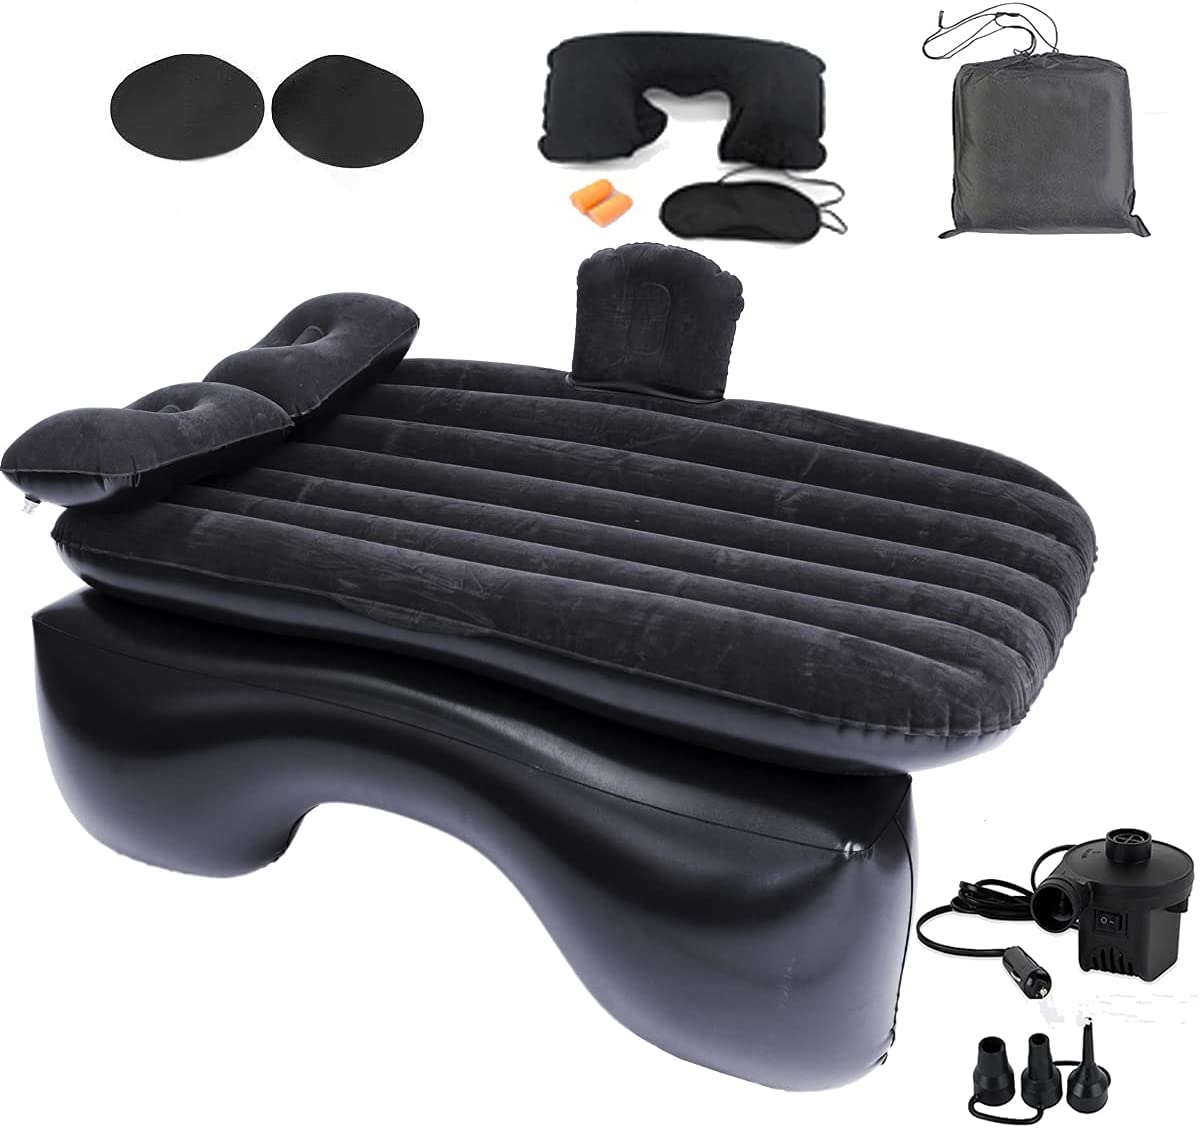 Onirii Inflatable Car Air Mattress Bed